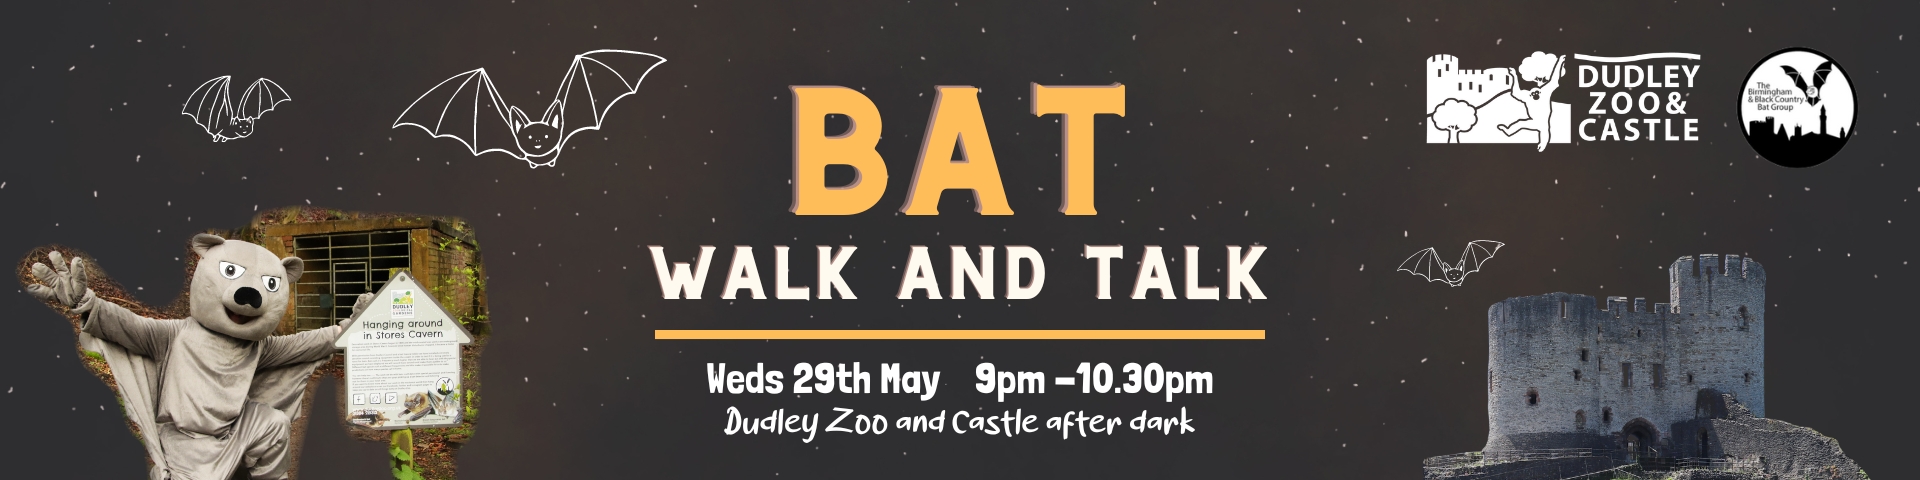 Bat walk and talk banner website